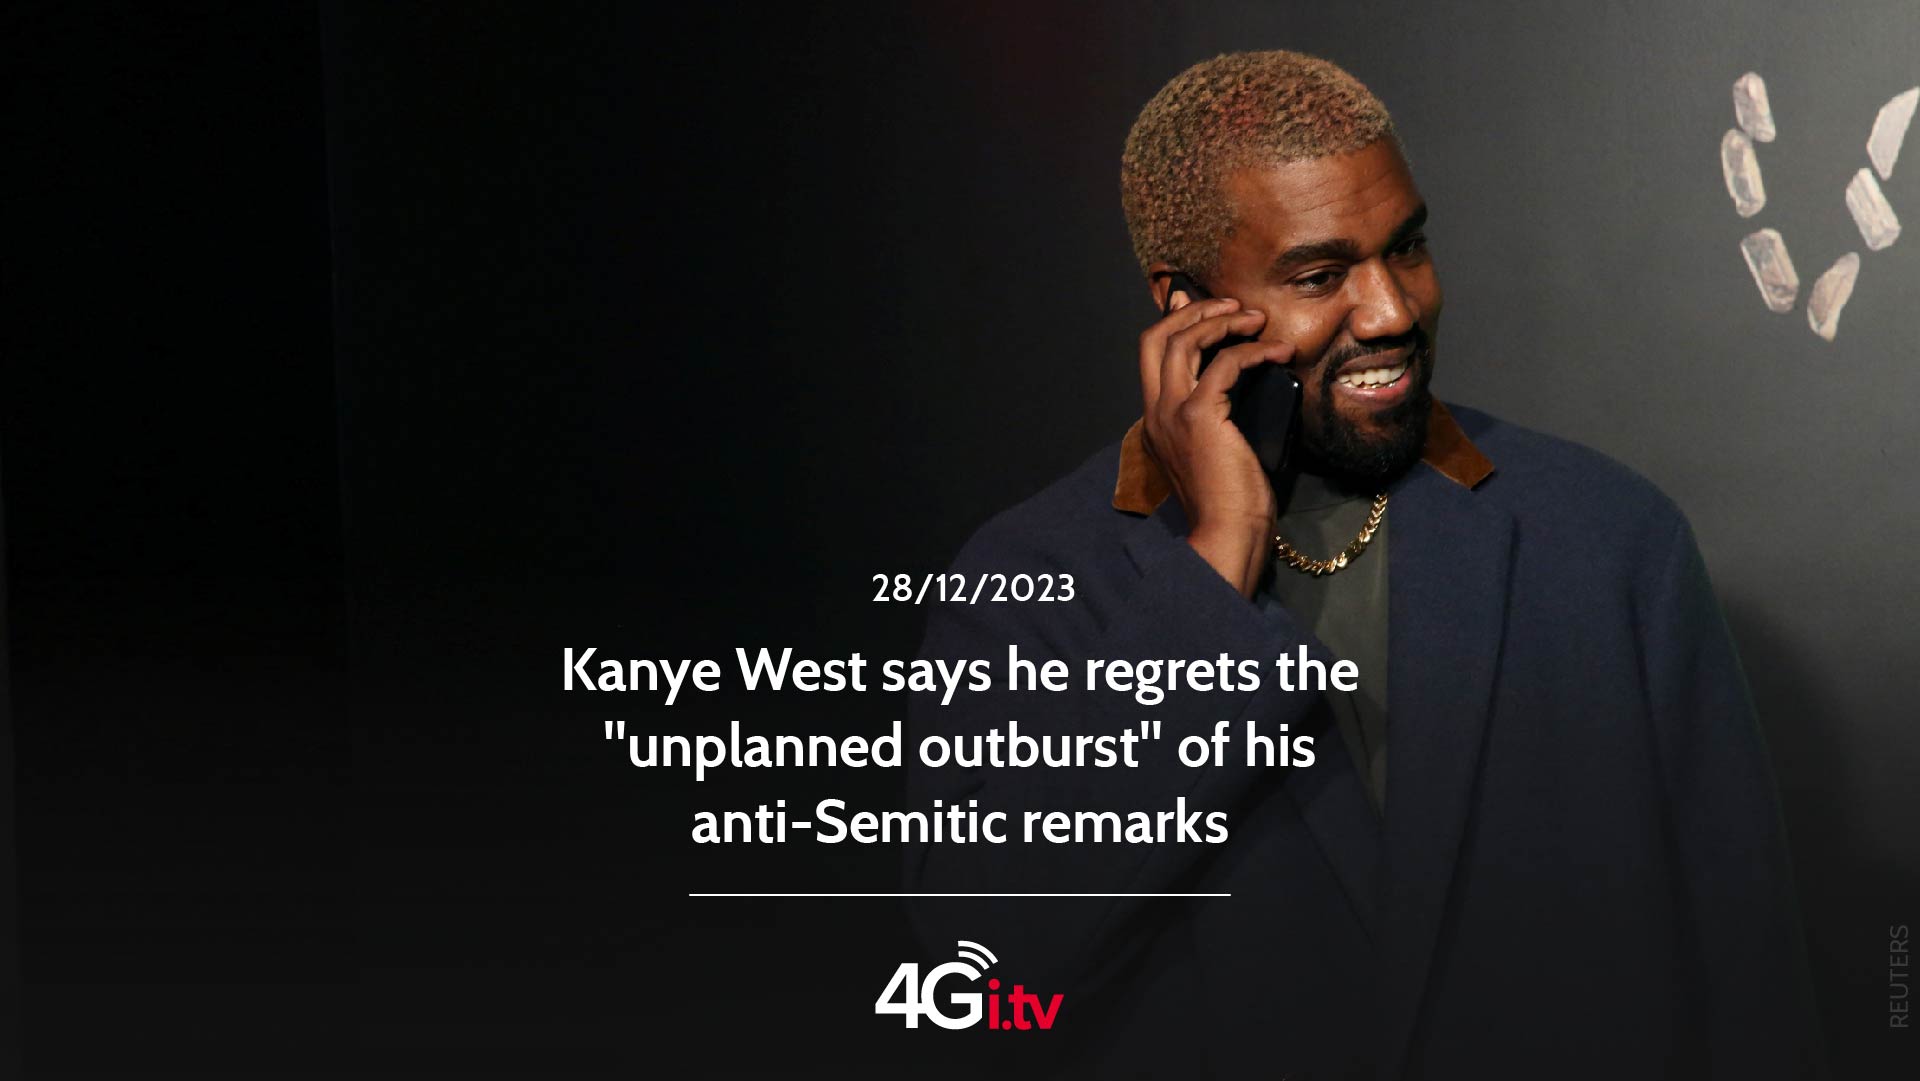 Подробнее о статье Kanye West says he regrets the “unplanned outburst” of his anti-Semitic remarks